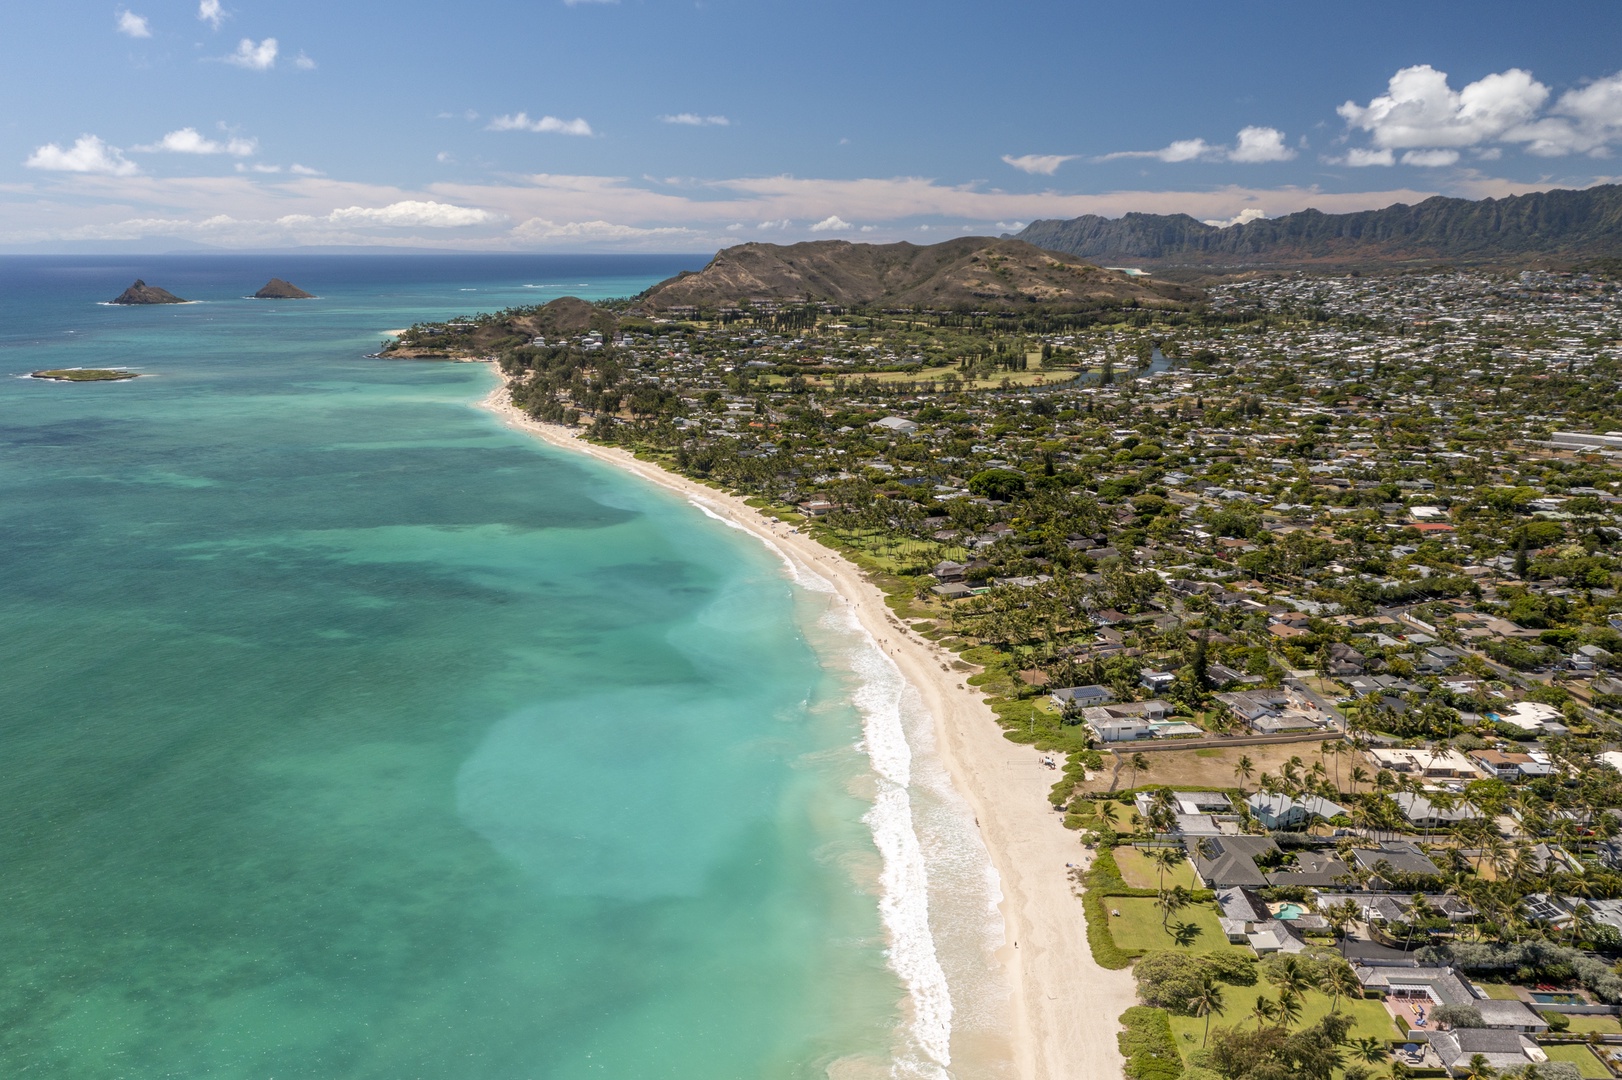 Kailua Vacation Rentals, Ranch Beach Estate - Breathtaking coastline view stretching to Lanikai and the enchanting Mokulua islands.